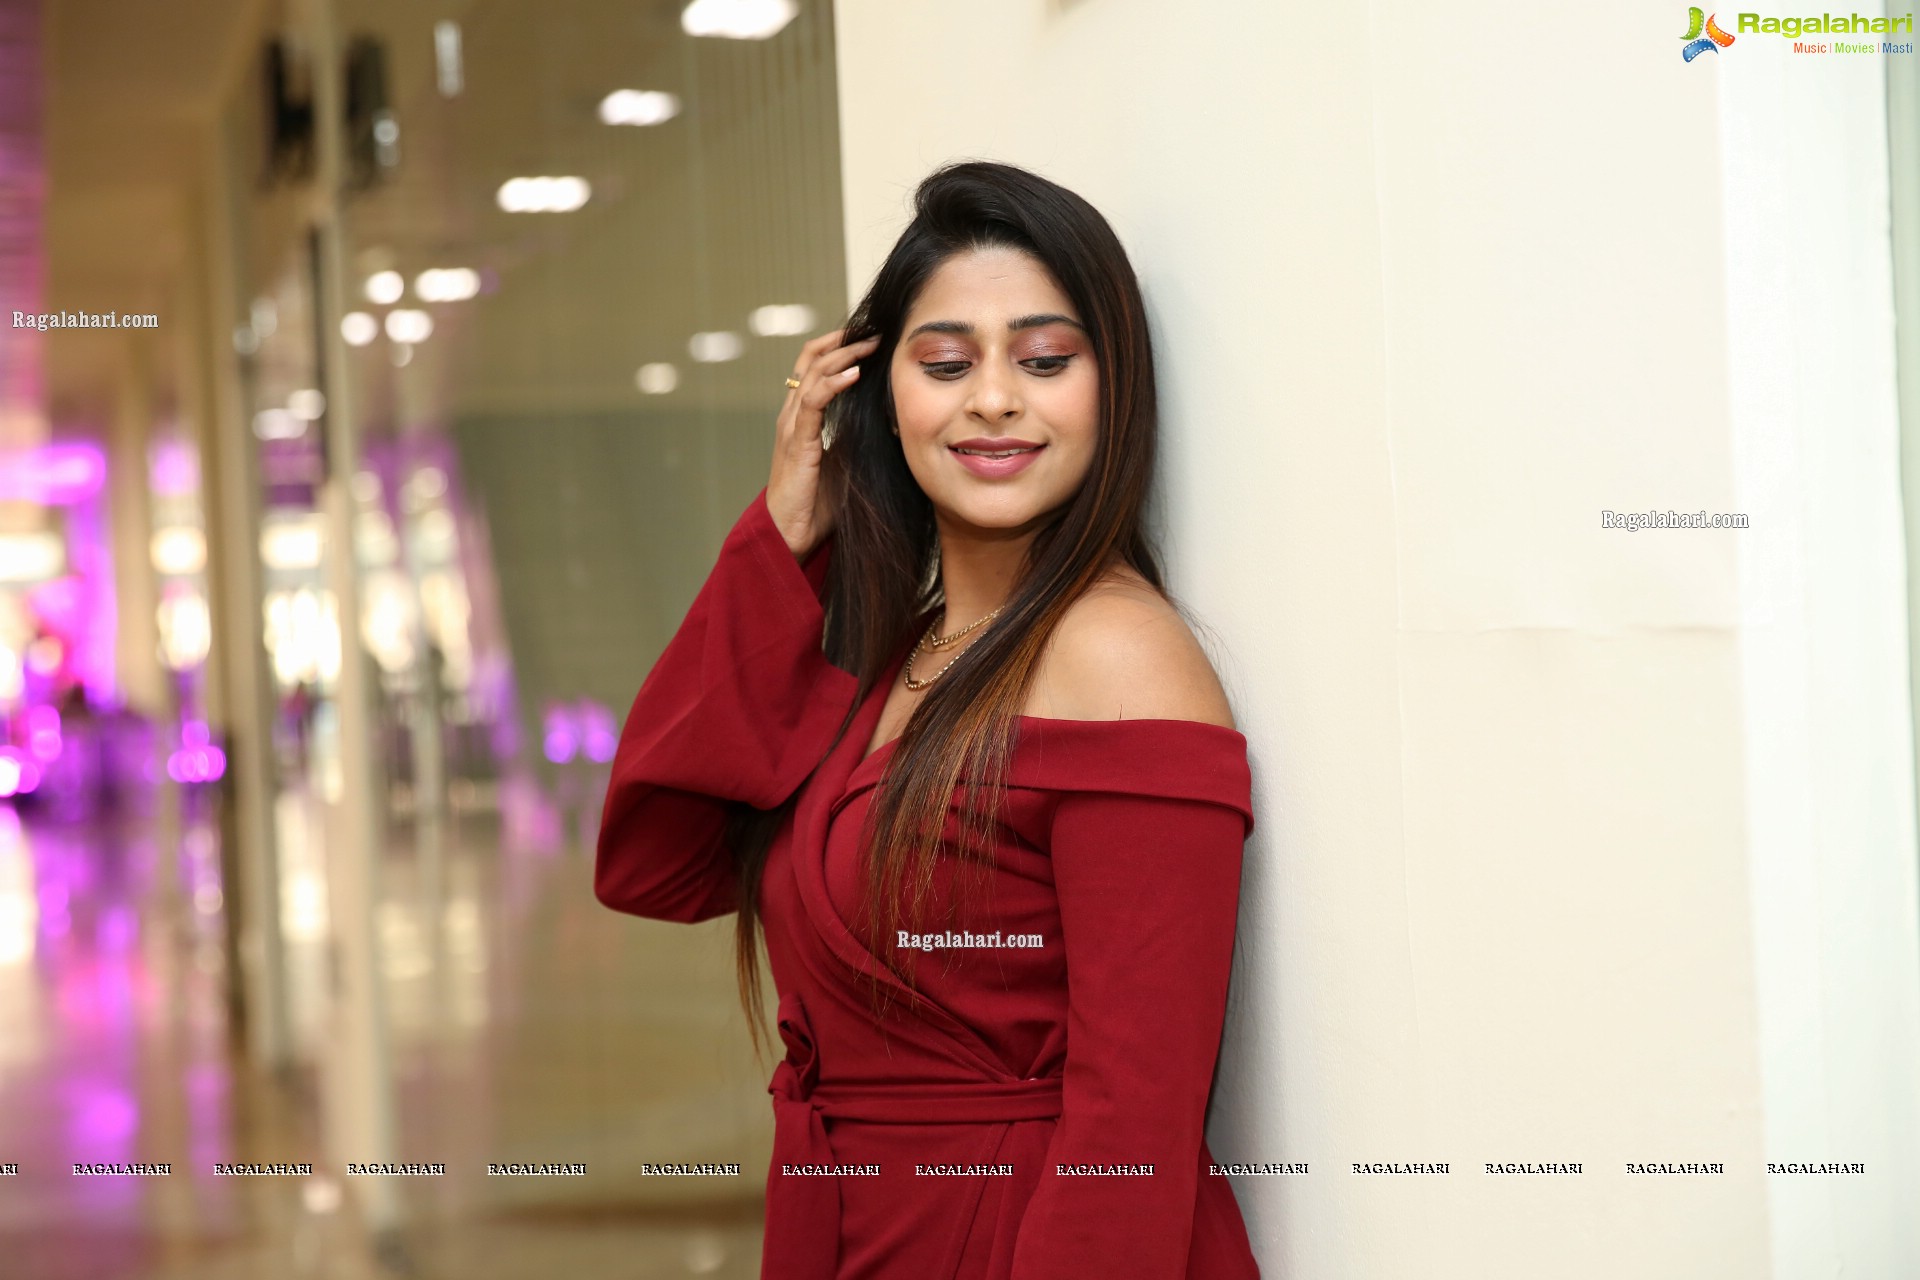 Shravani Varma in Maroon Off Shoulder Wrap Belt Tie Front Dress, HD Photo Gallery